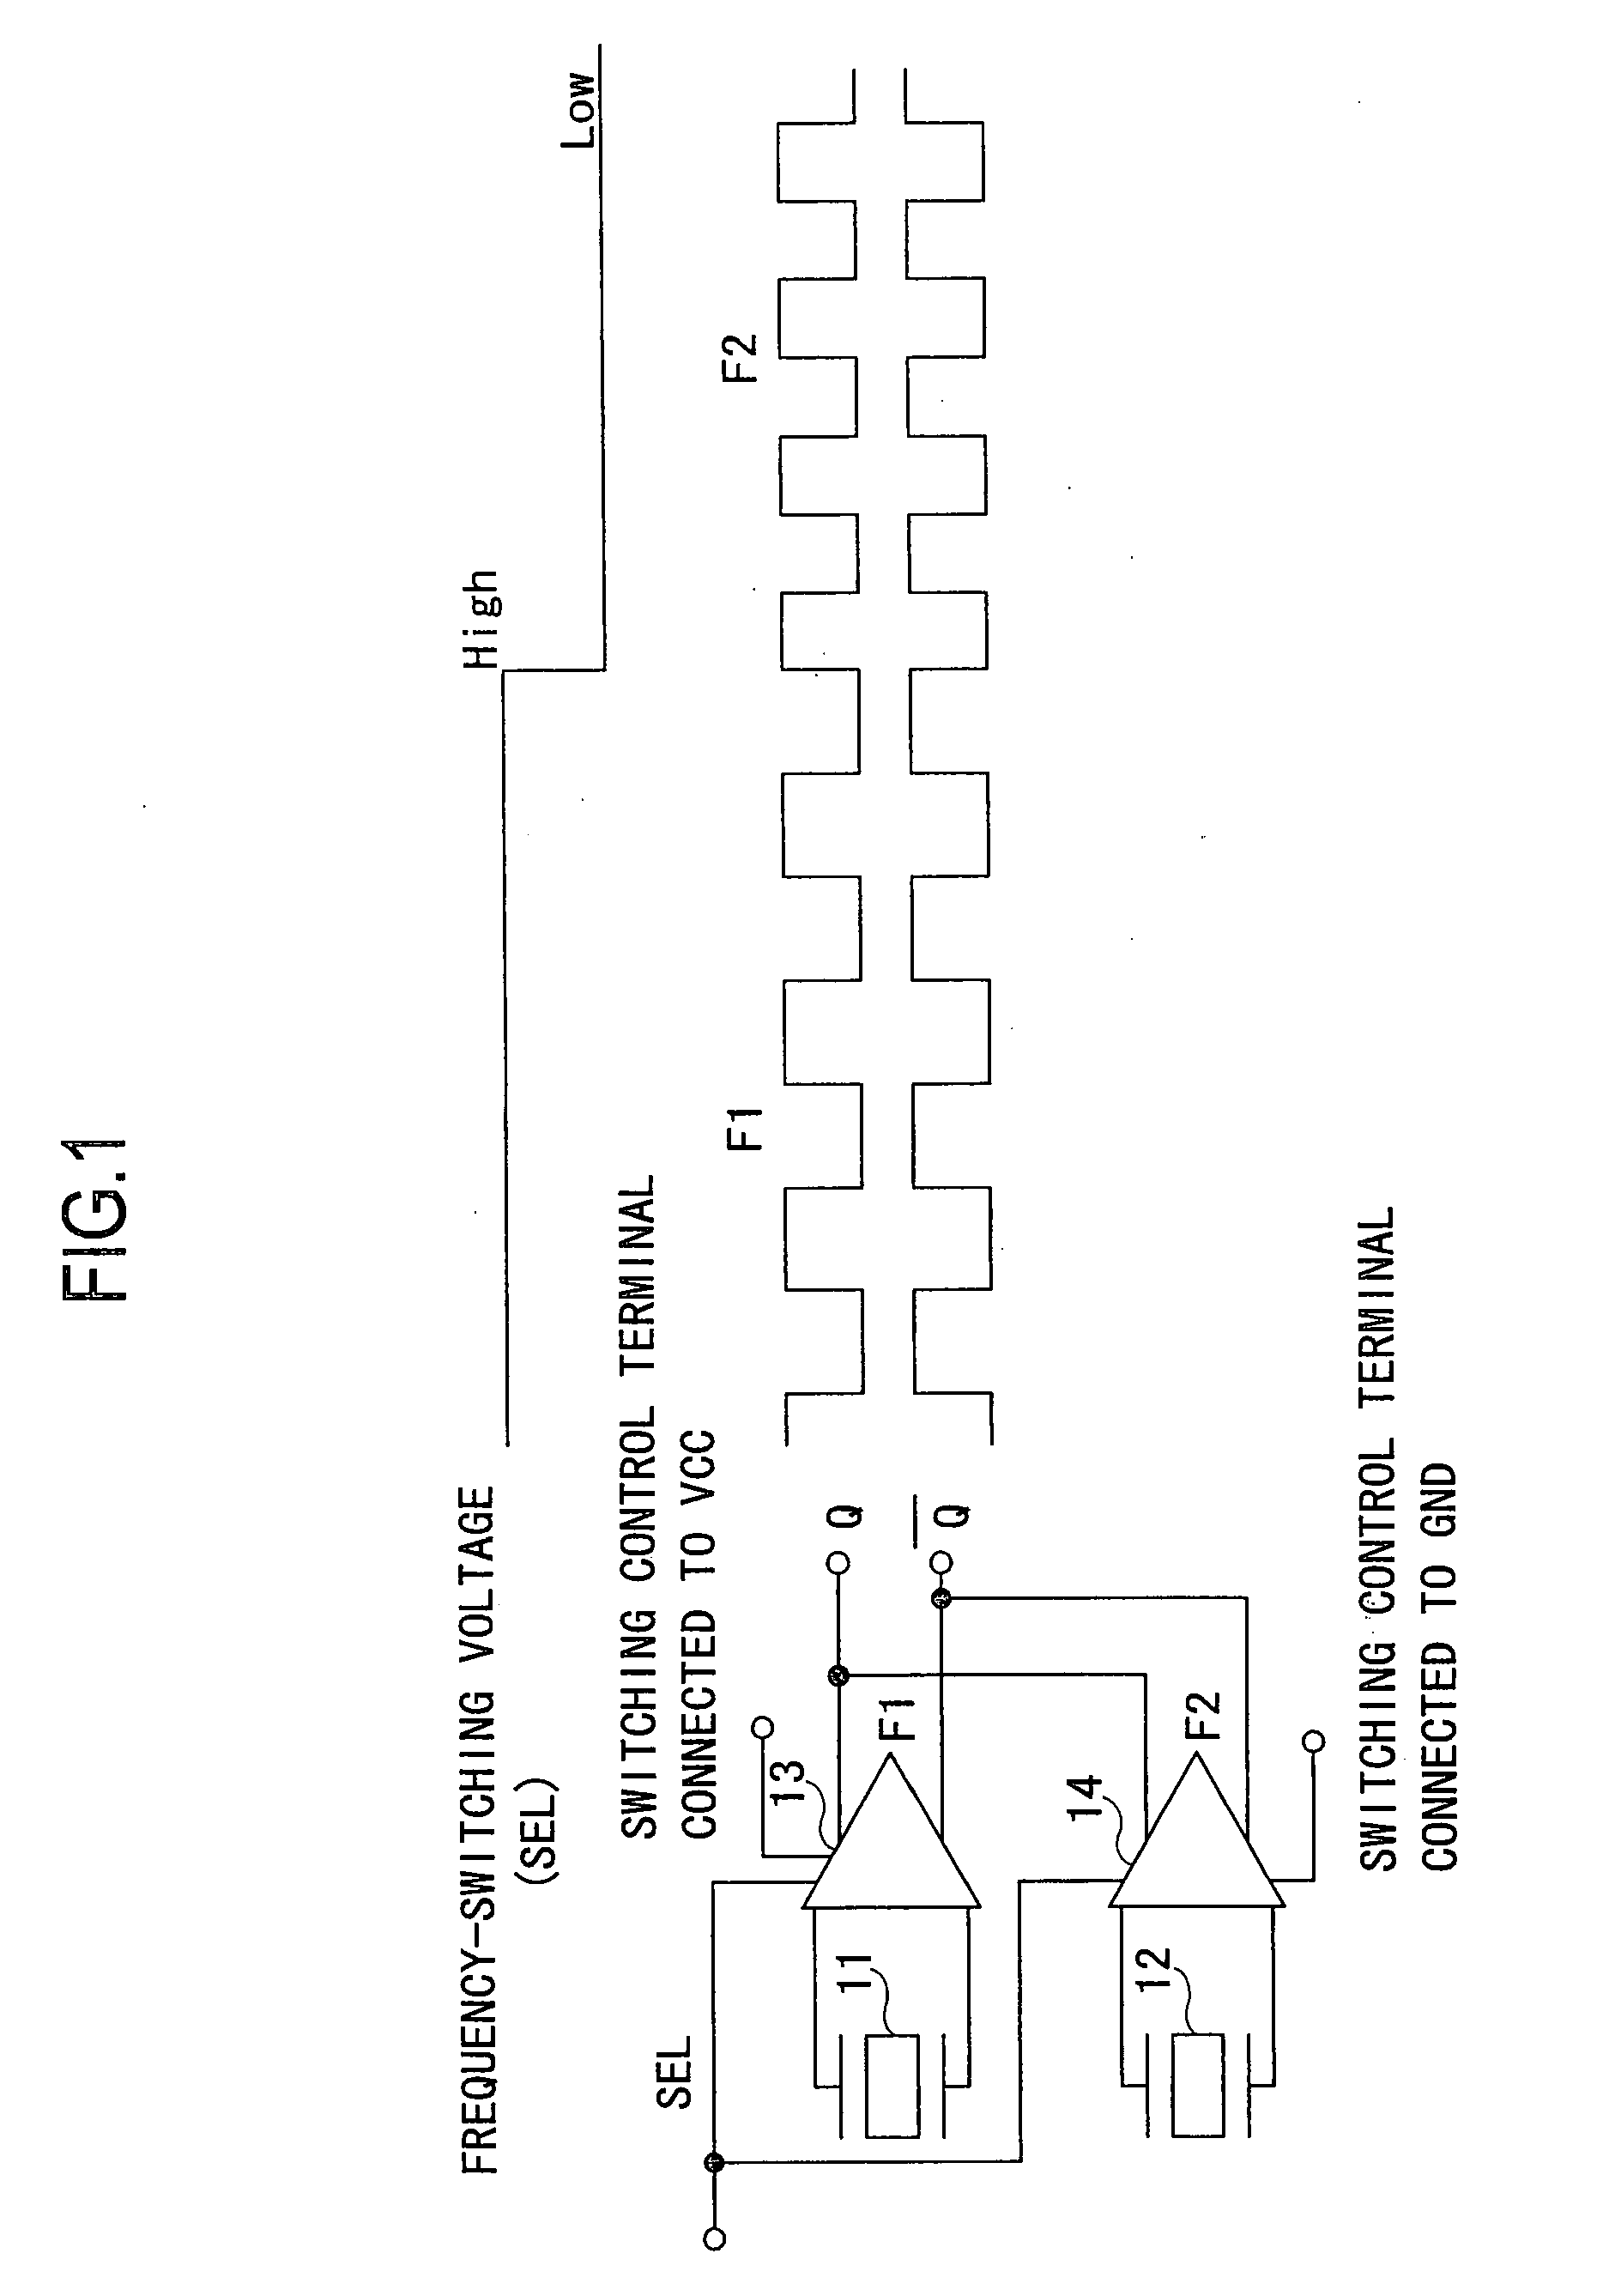 Frequency-selective oscillator